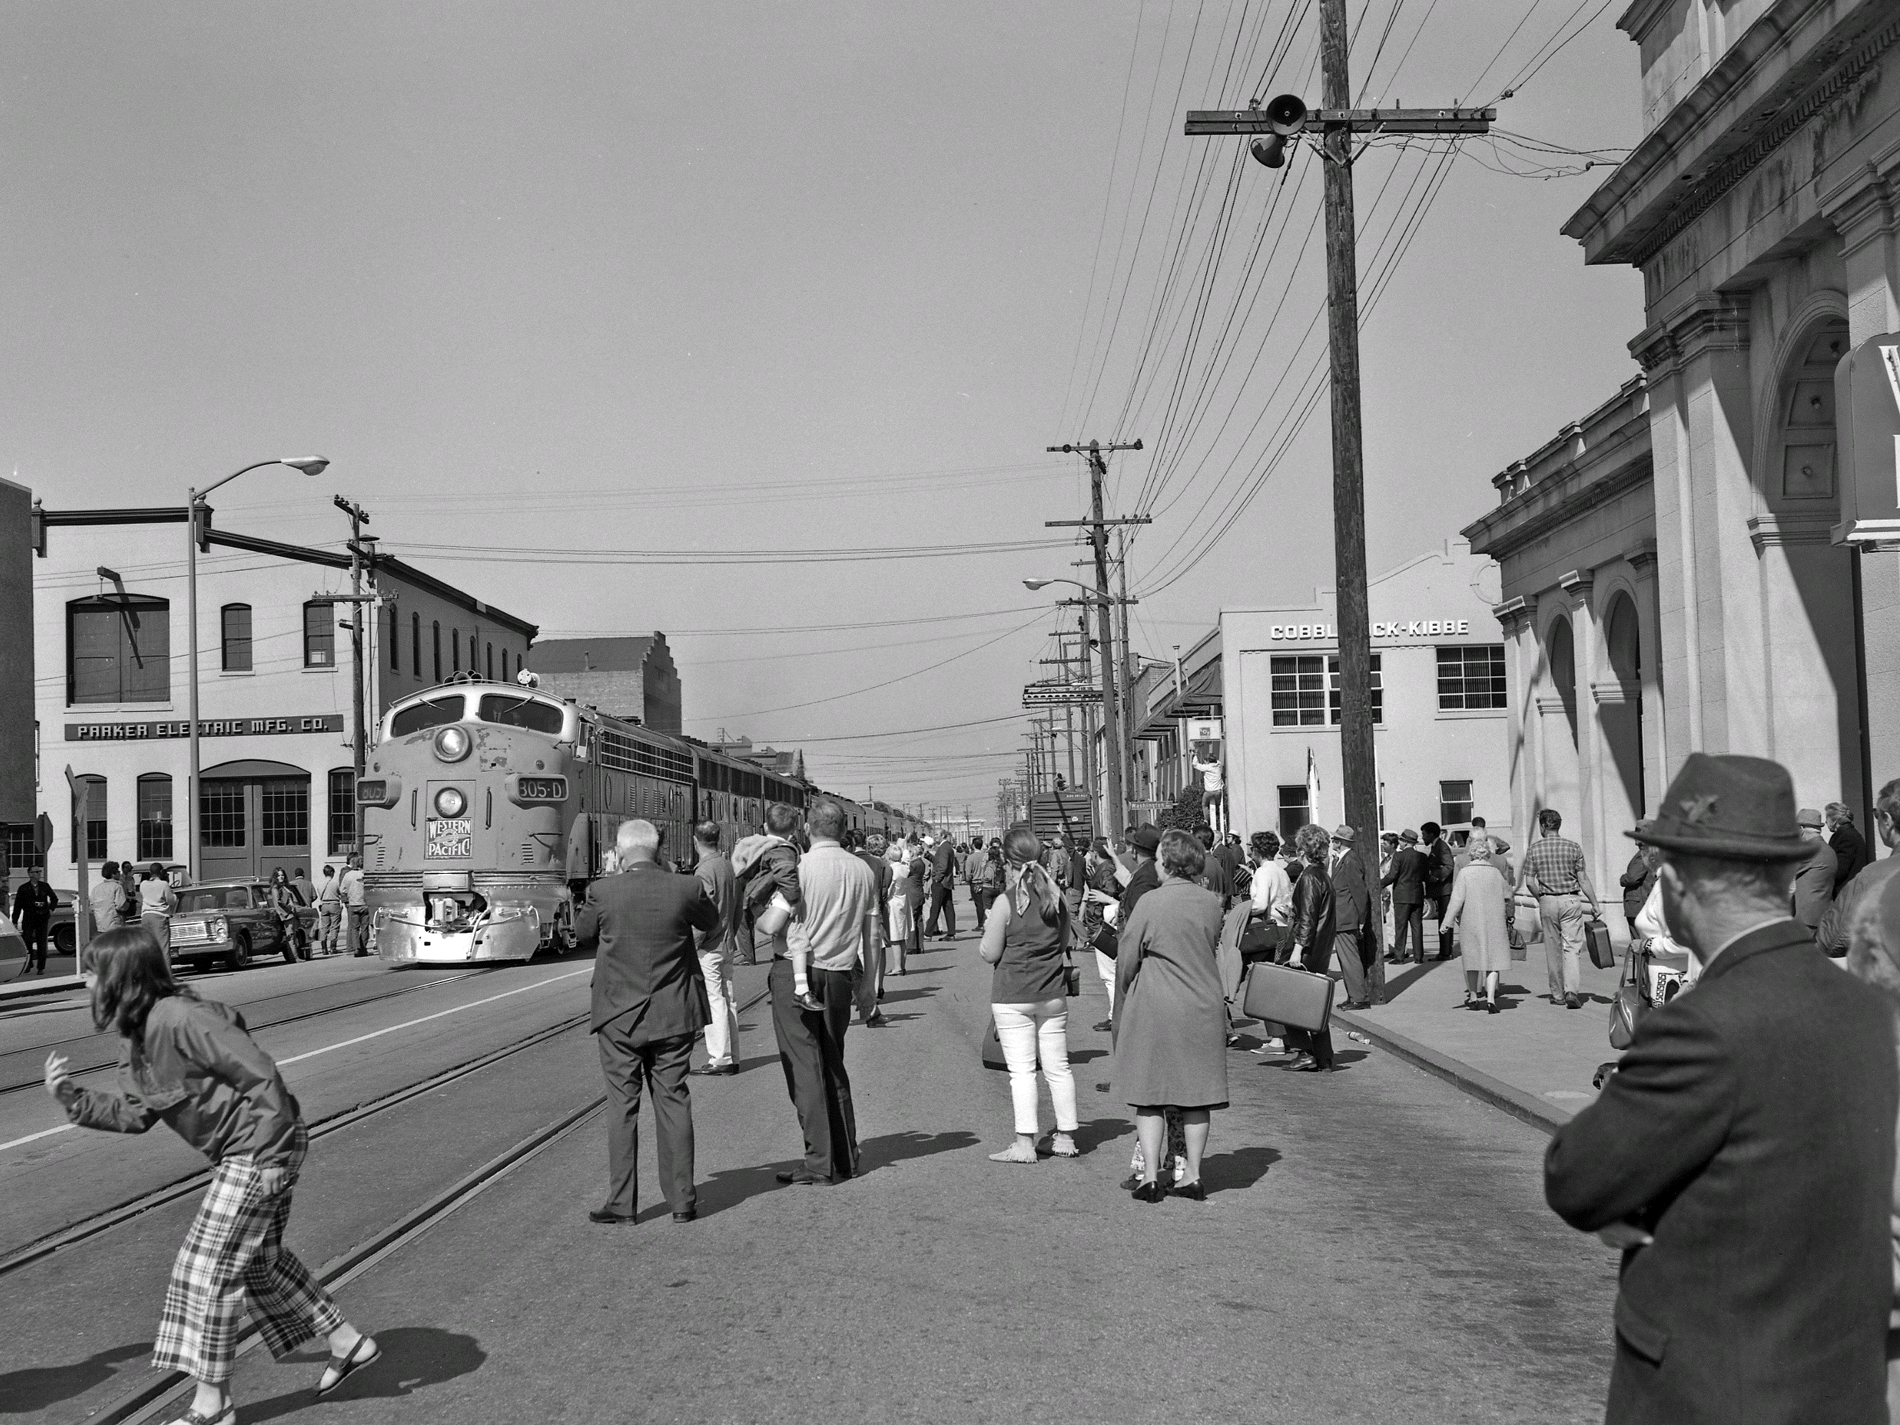 3rd St. Union Pacific Railroad Track, 1950s